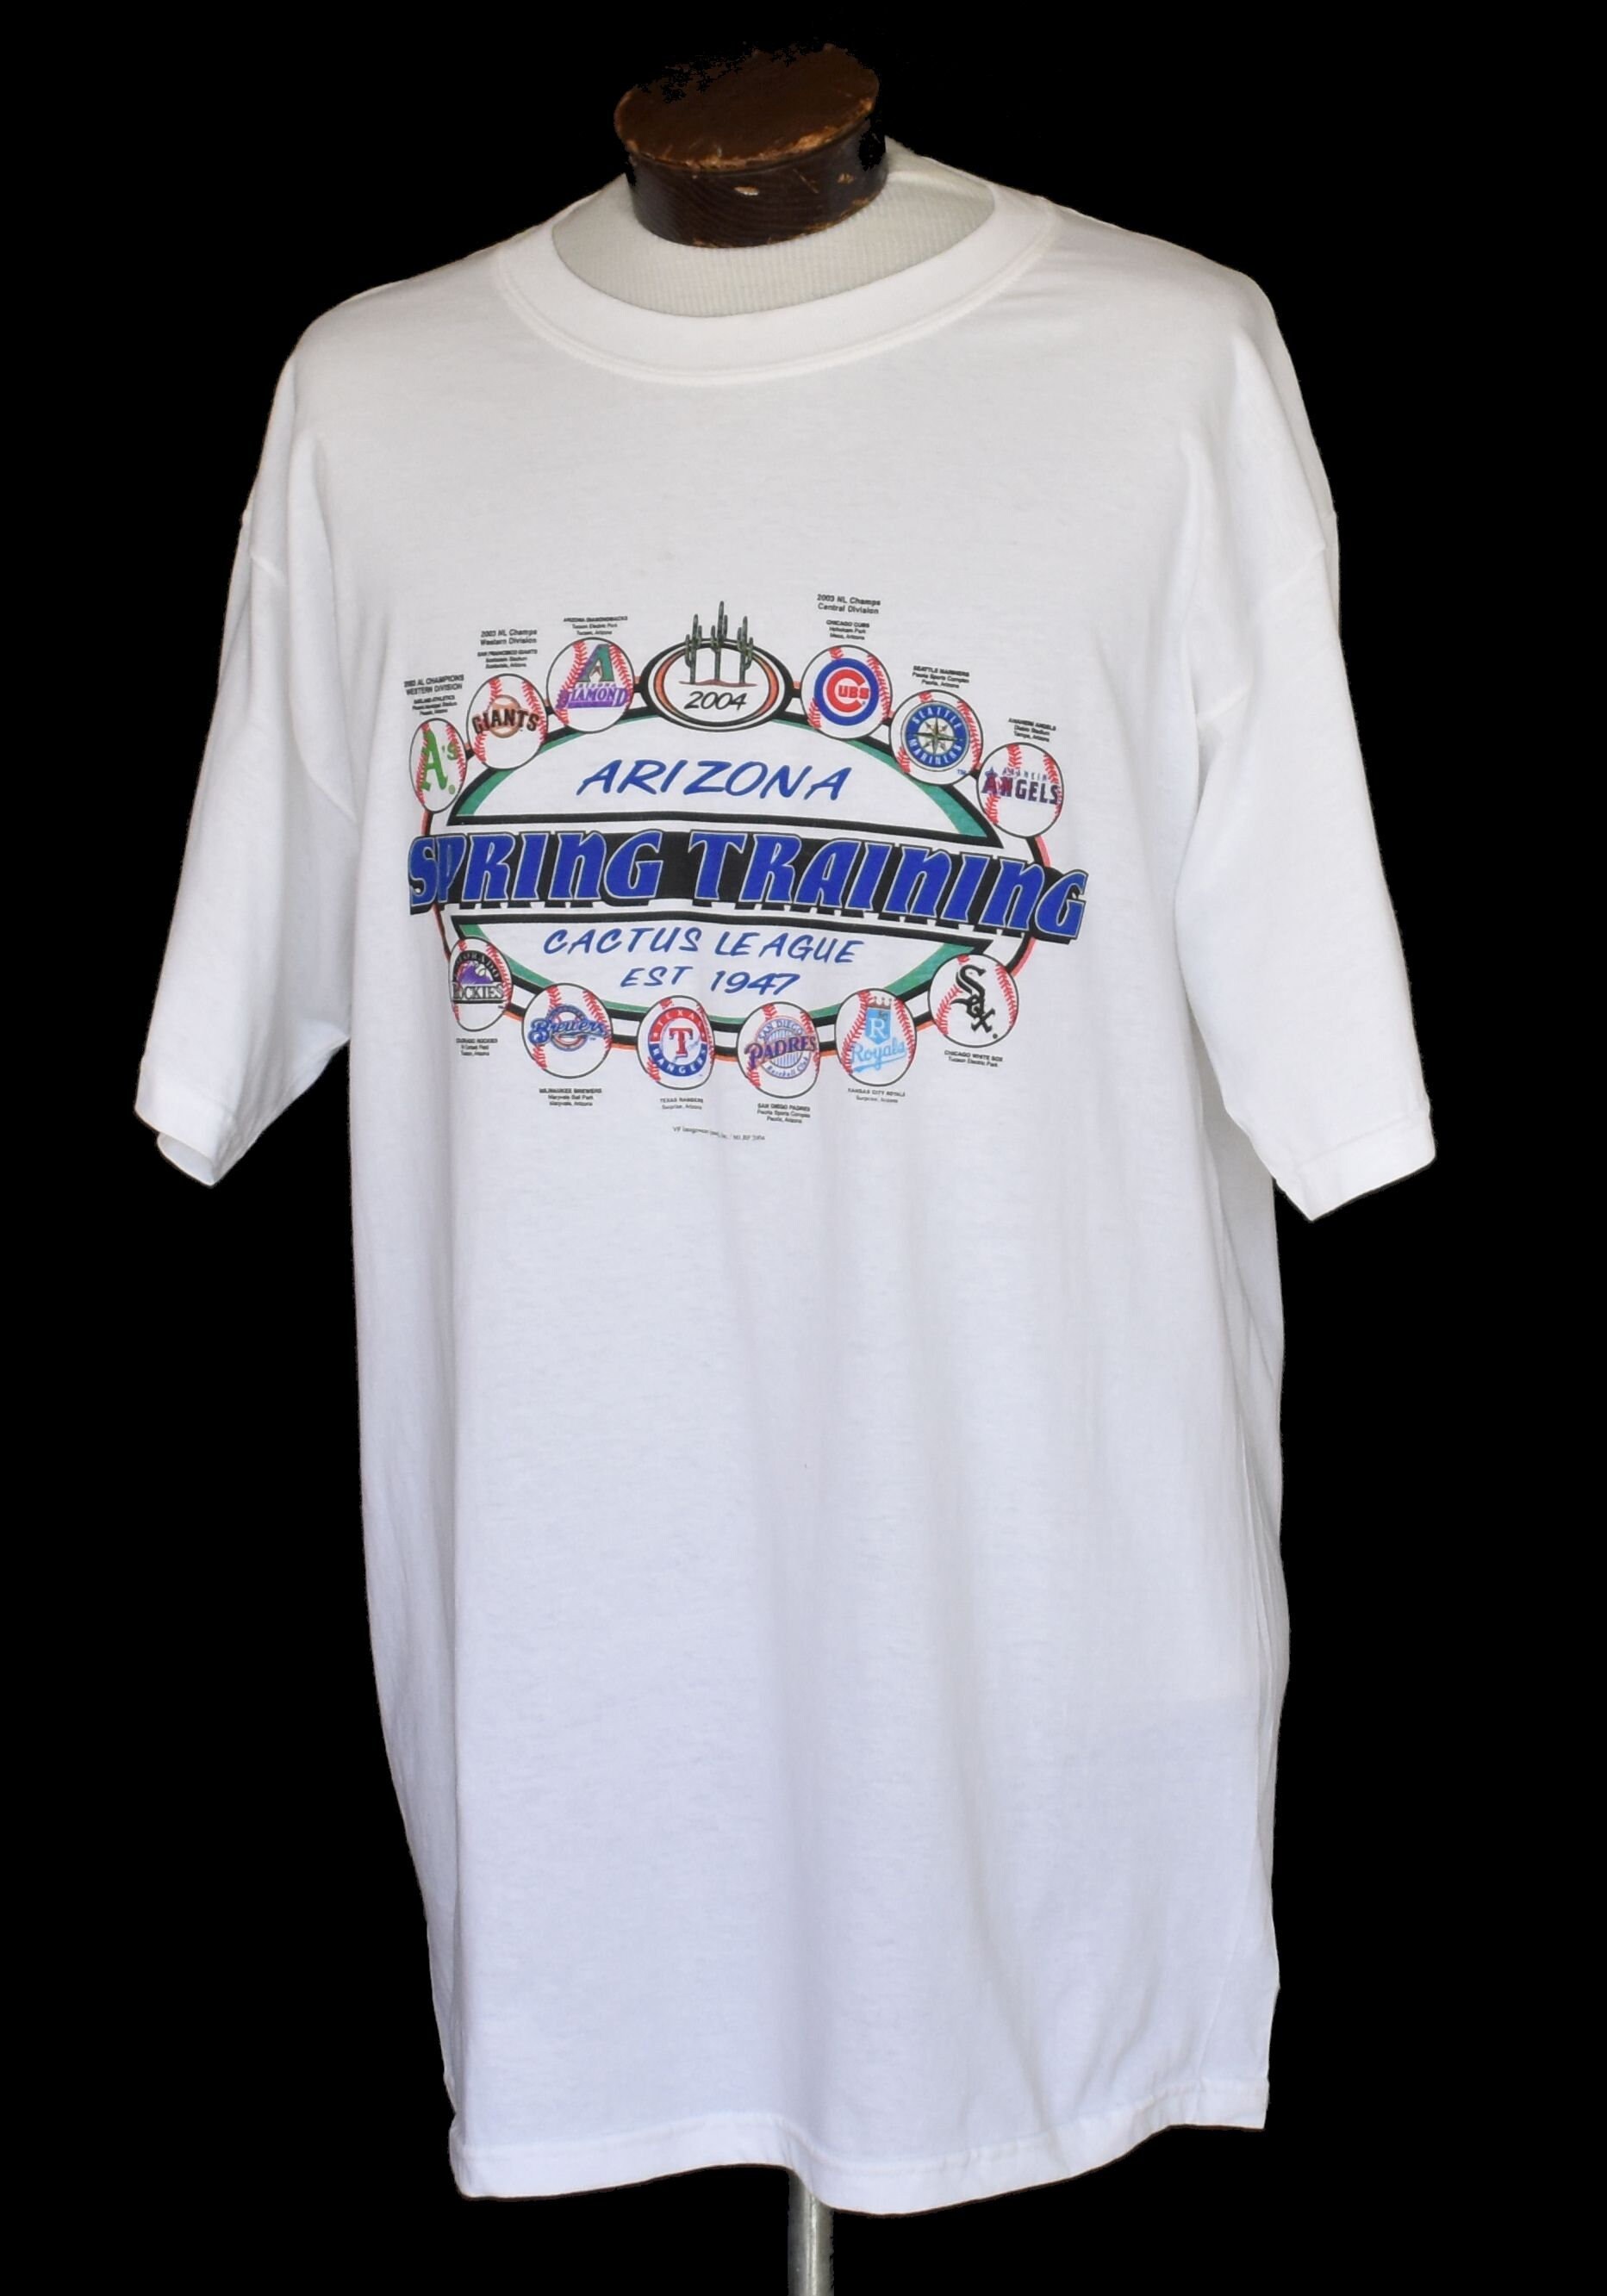 Arizona Cactus League T-shirt, MLB Spring Training Tee, Size XL 